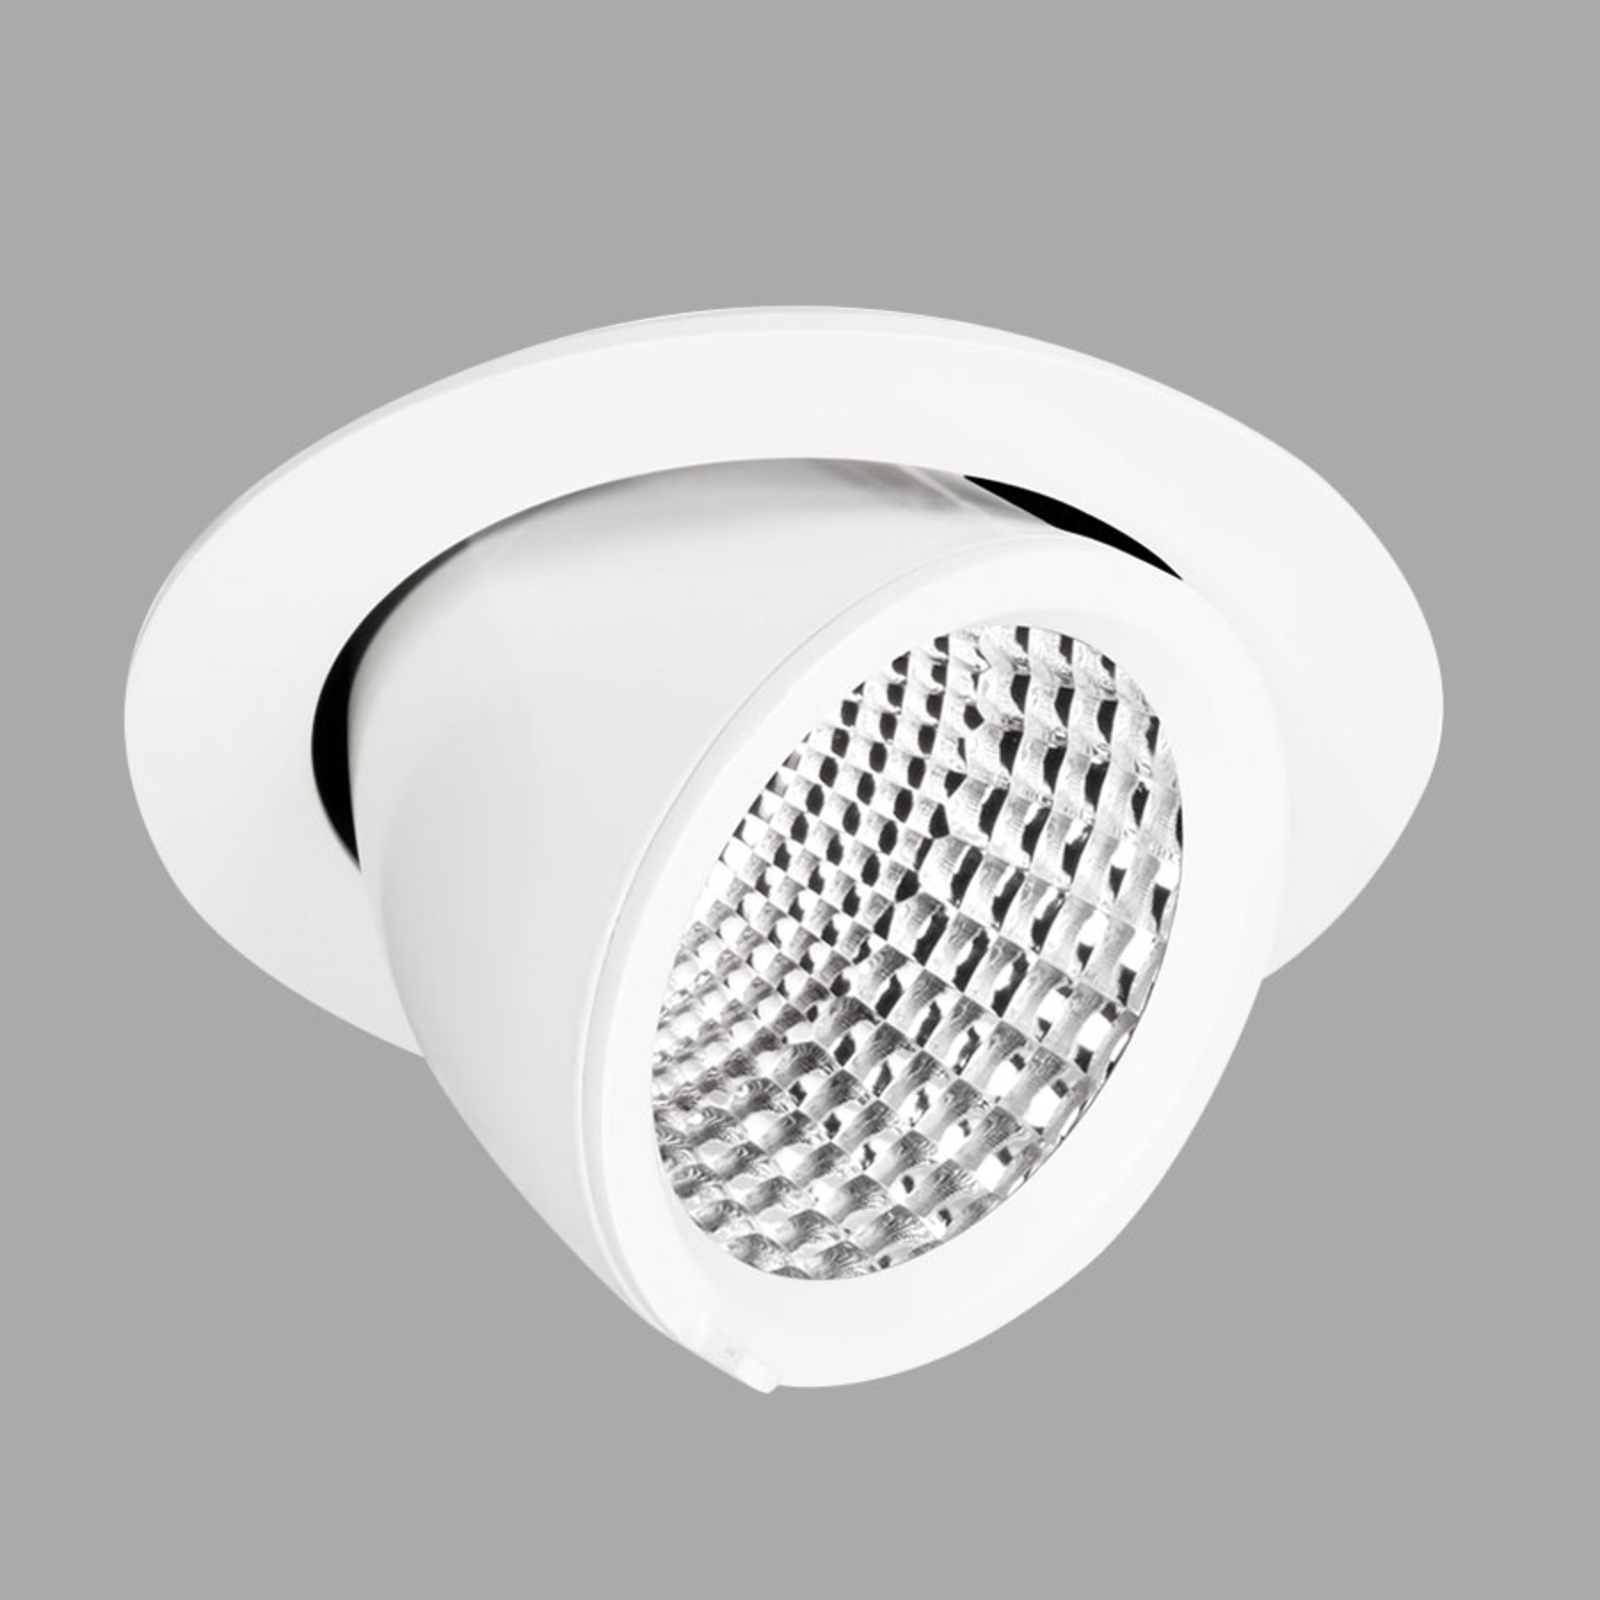 Spot Reflektor - Einbaulampe EB433 LED weiß 4.000K